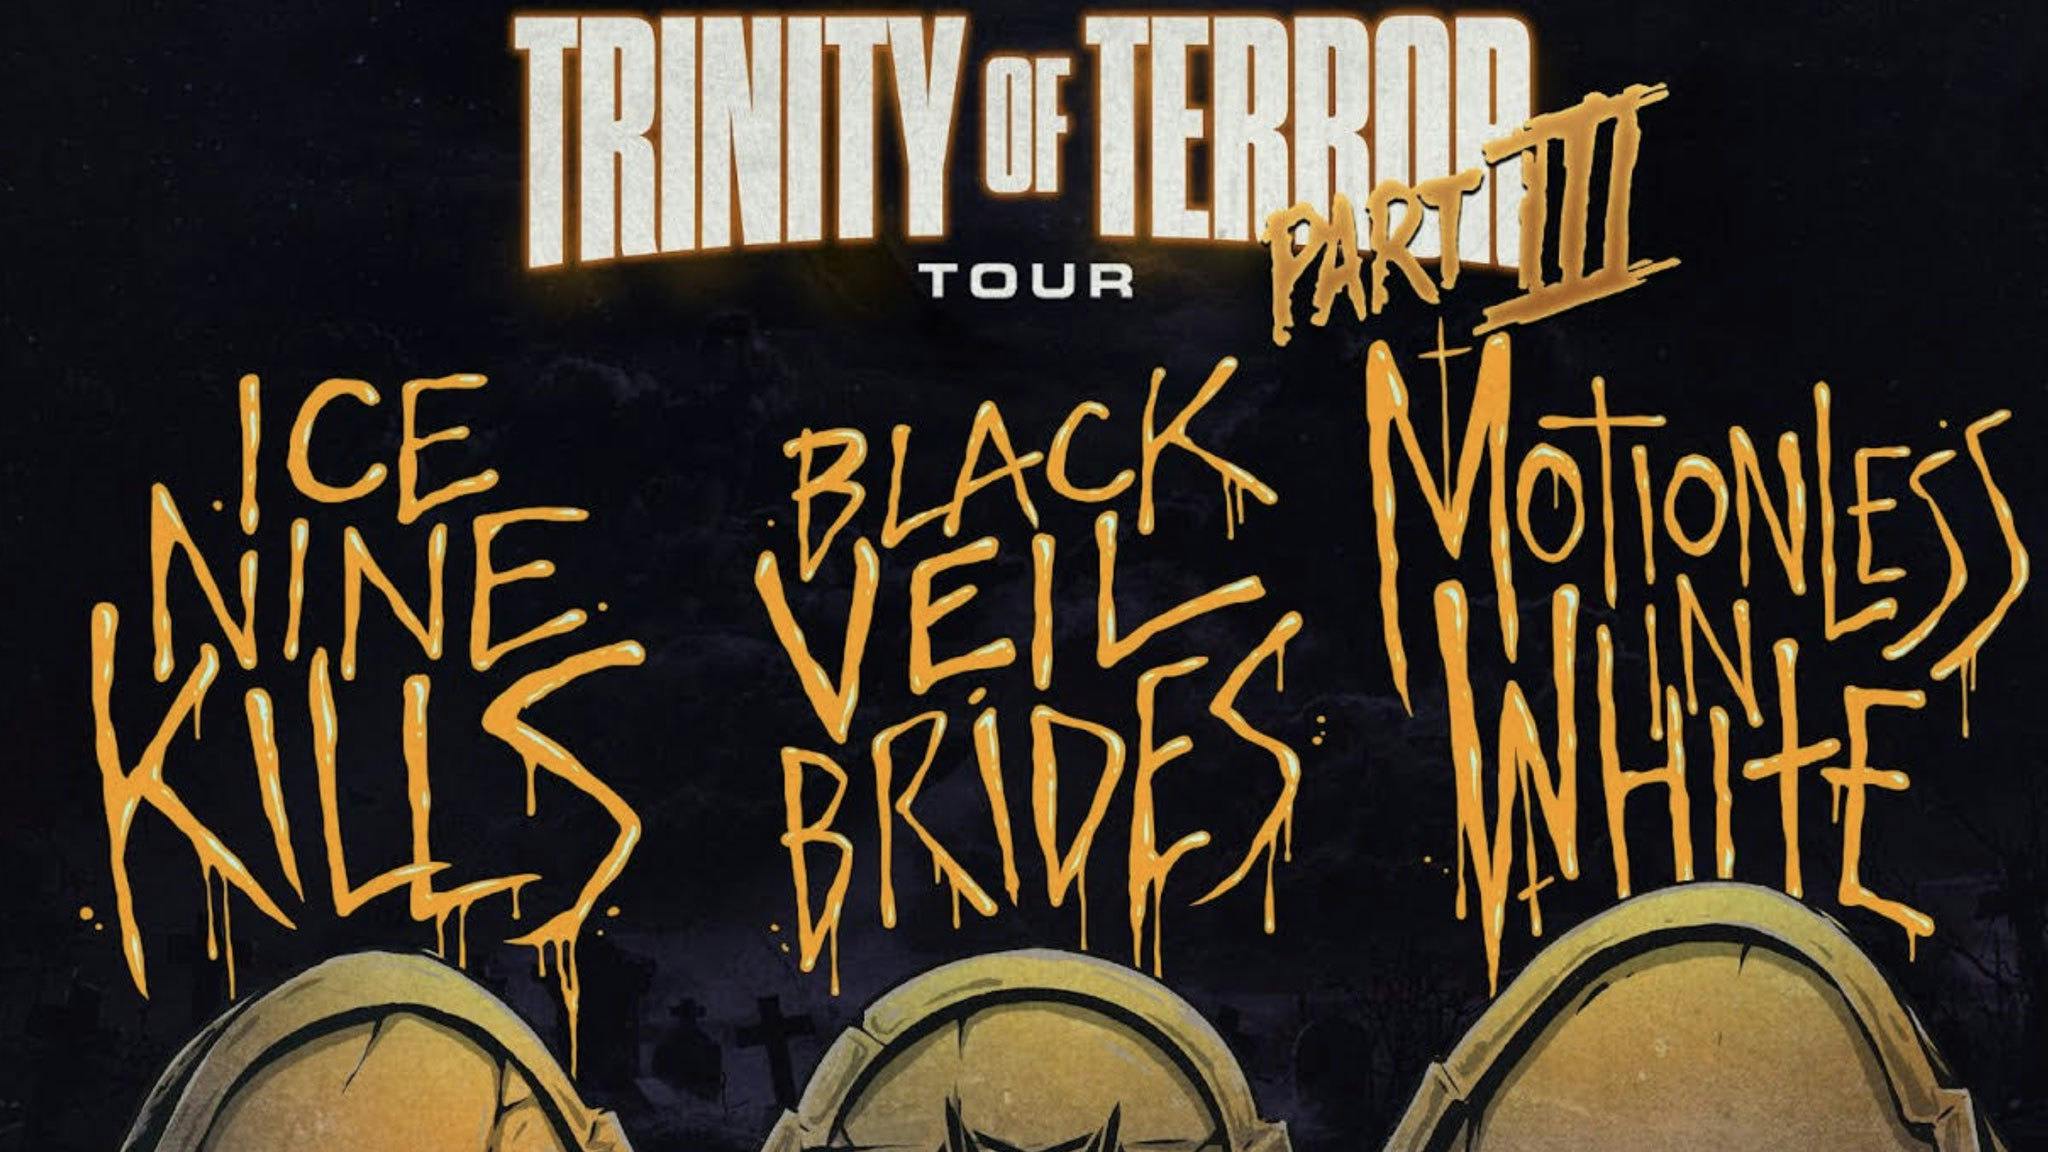 Ice Nine Kills, Black Veil Brides and Motionless In White announce third leg of Trinity Of Terror tour